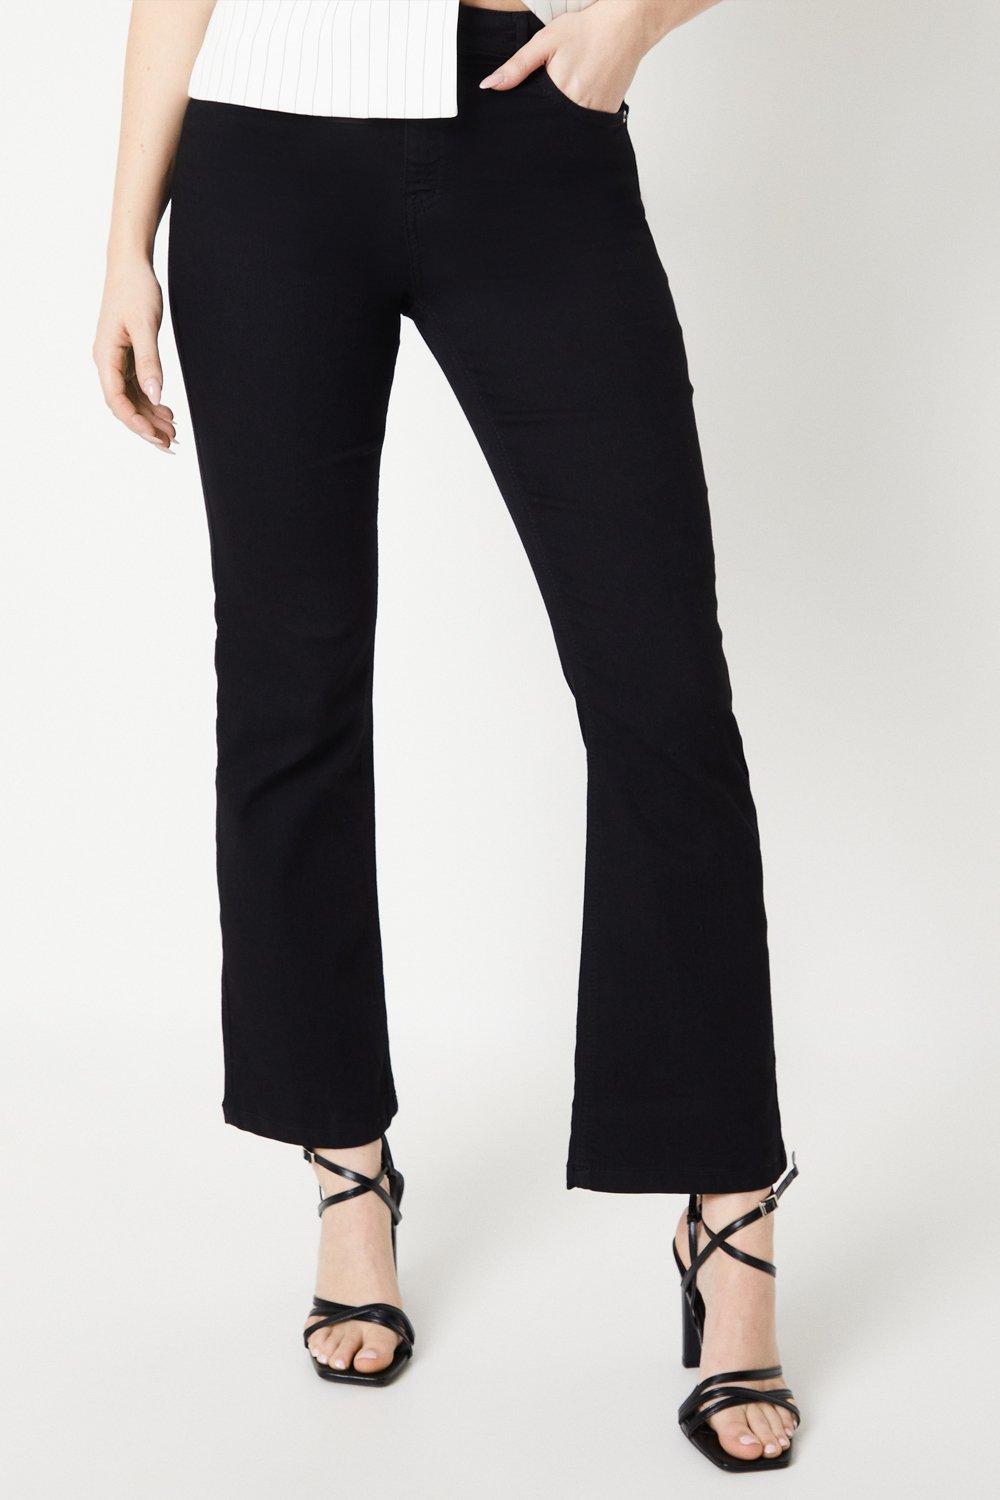 Women’s Comfort Stretch Bootcut Jeans - black - 10